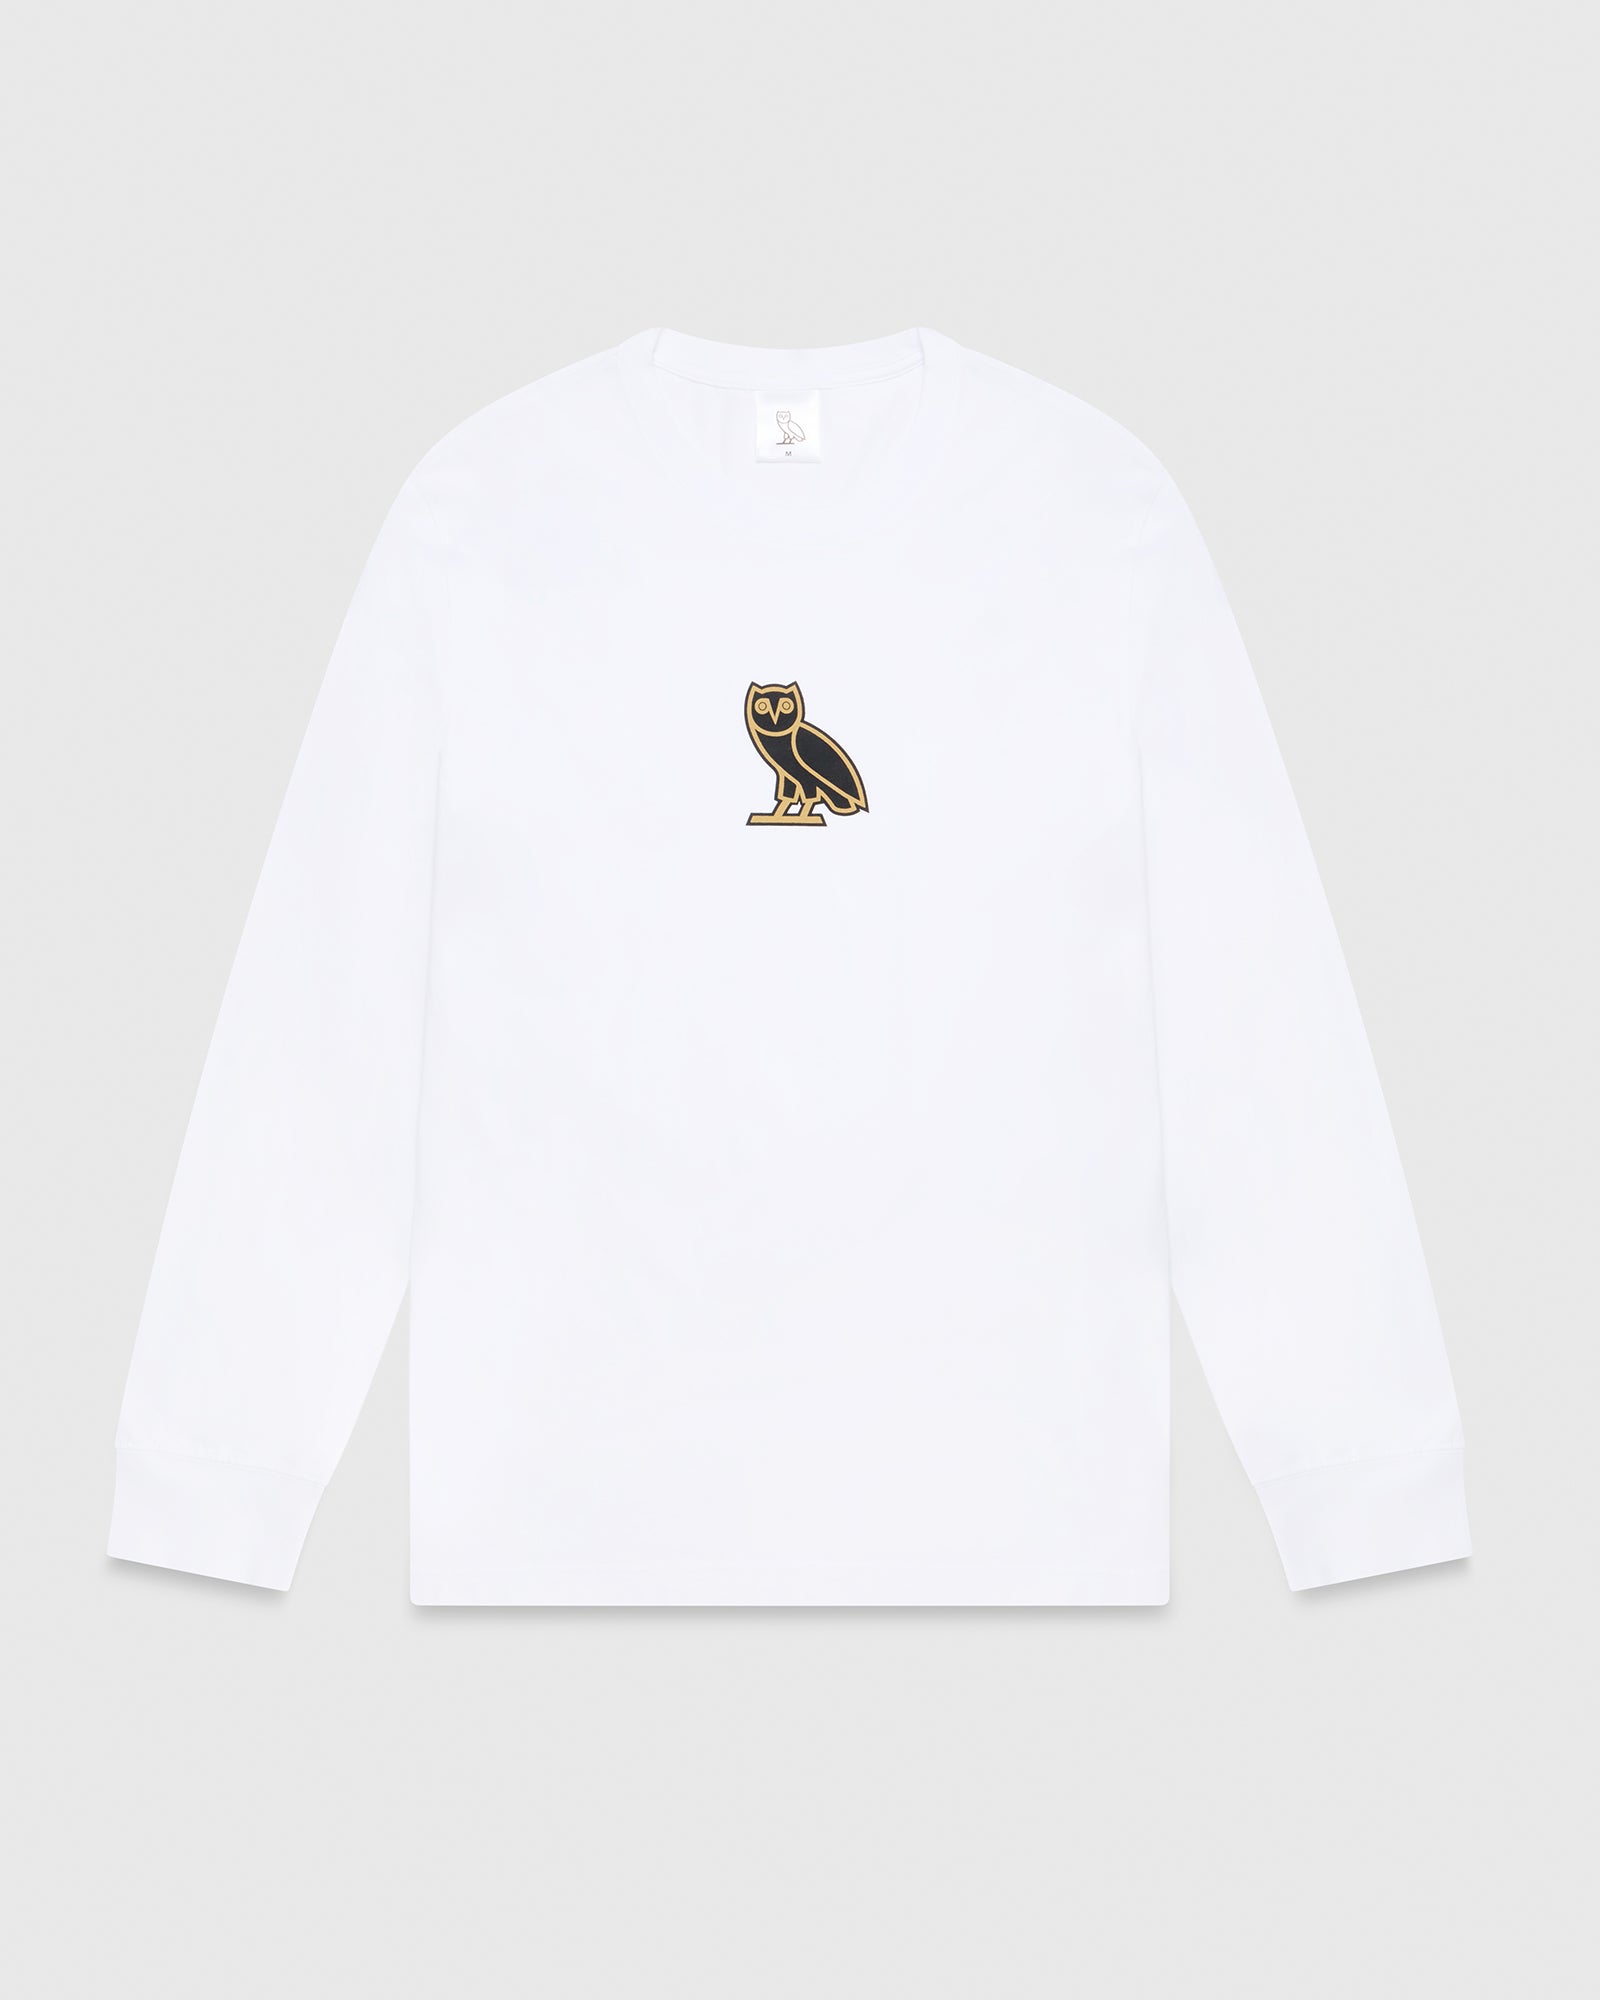 OVO Owl logo 2023 tee, hoodie, sweater, long sleeve and tank top